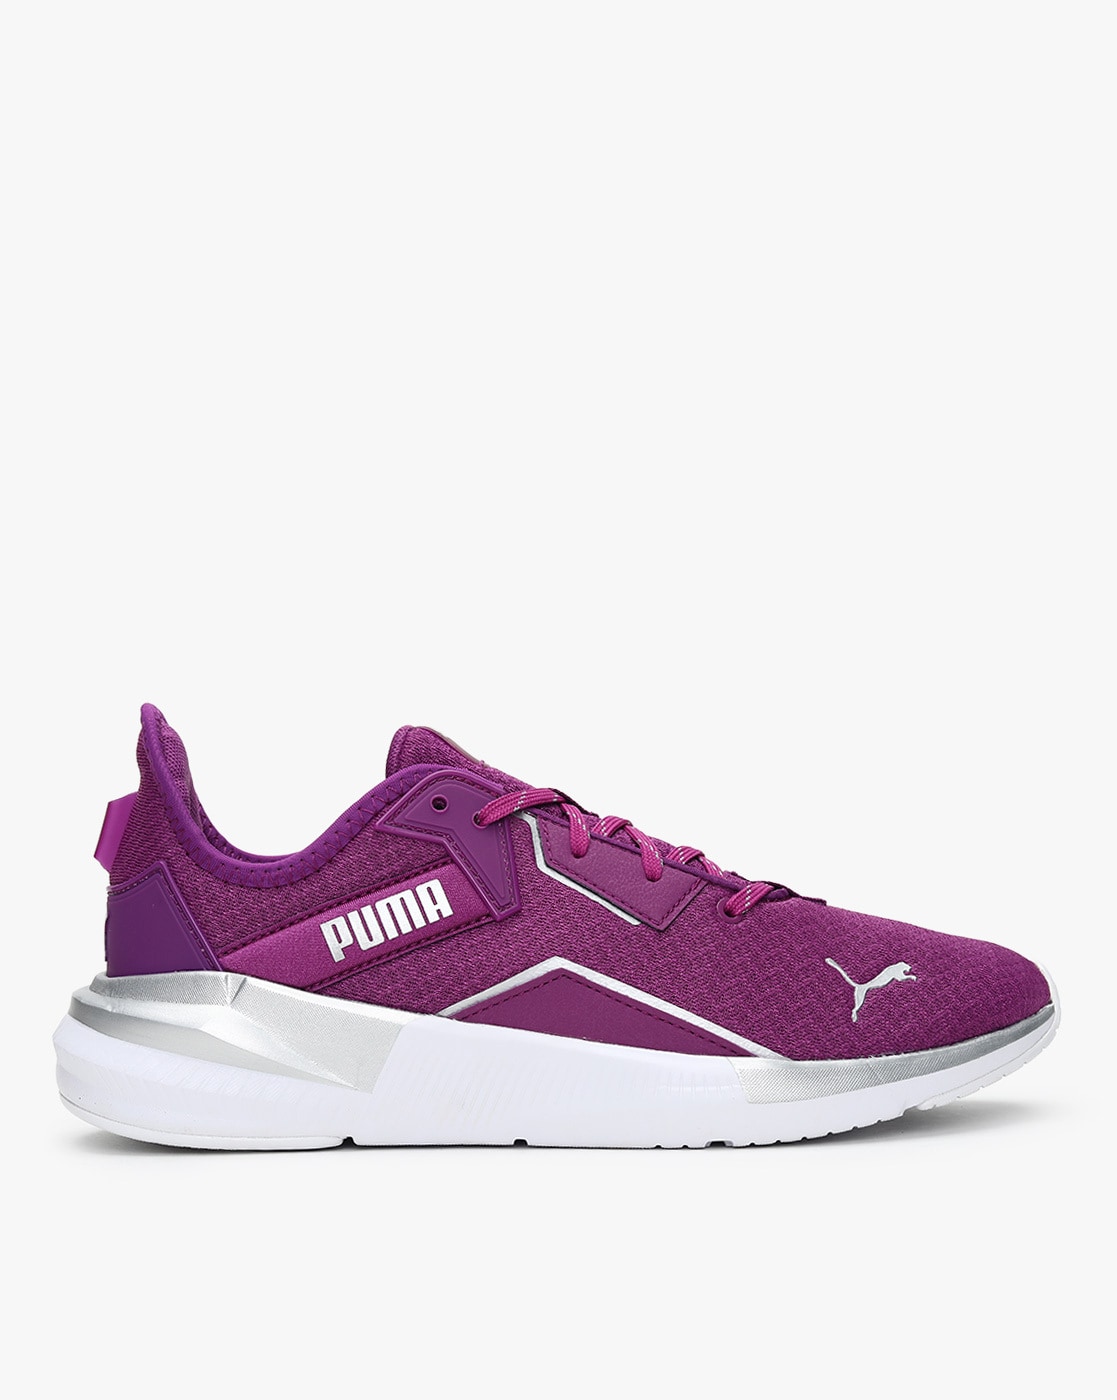 puma pink and purple shoes